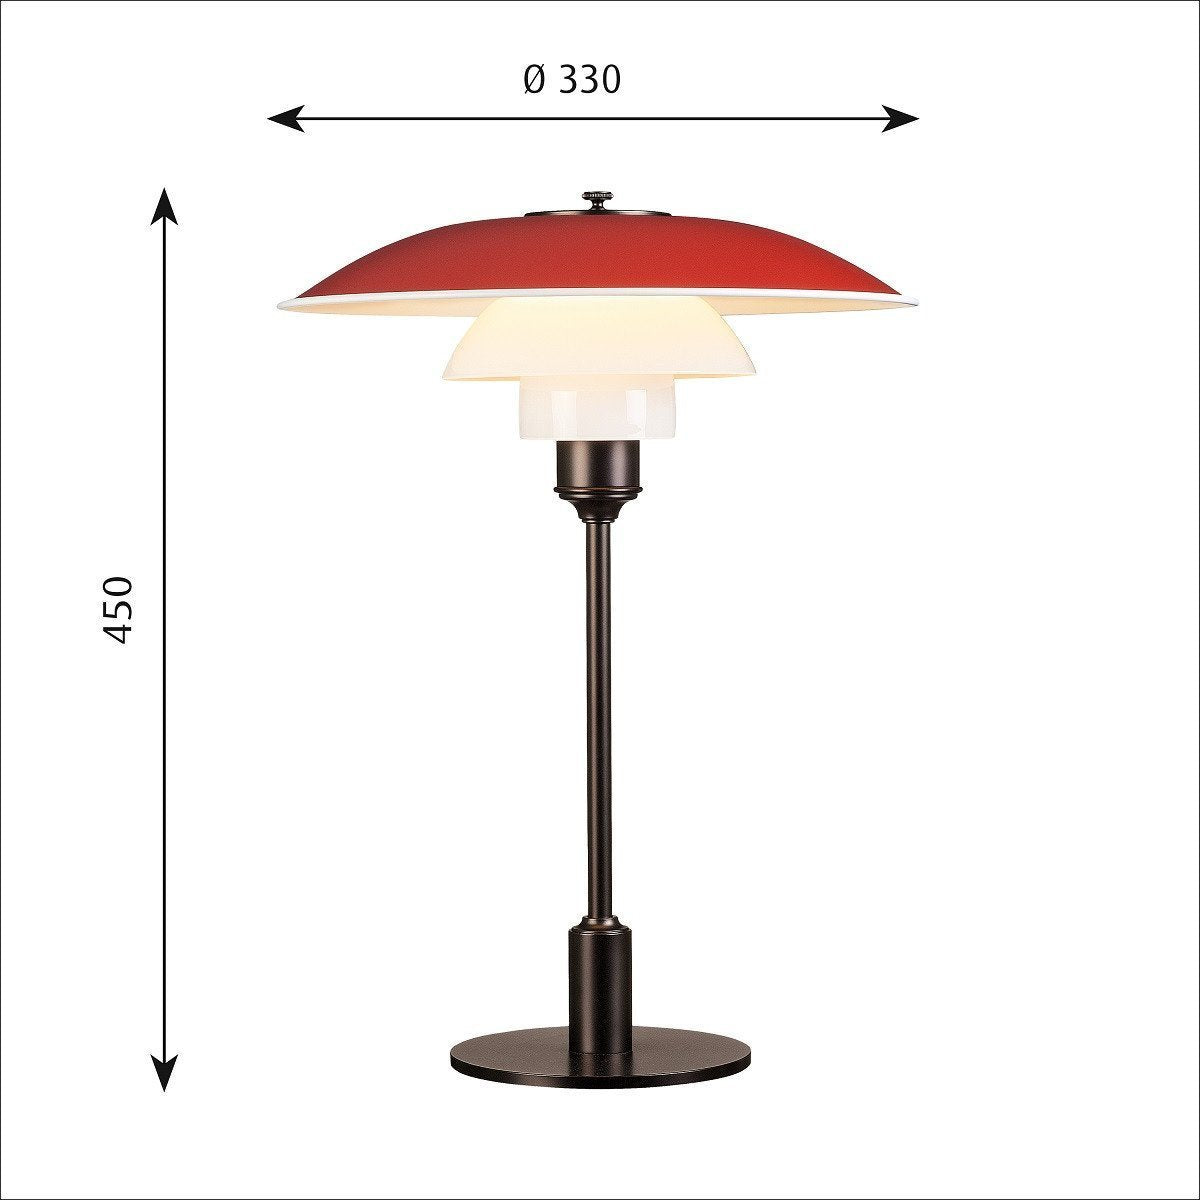 Louis Poulsen Ph 3 1/2 2 1/2 Table Lamp, Red